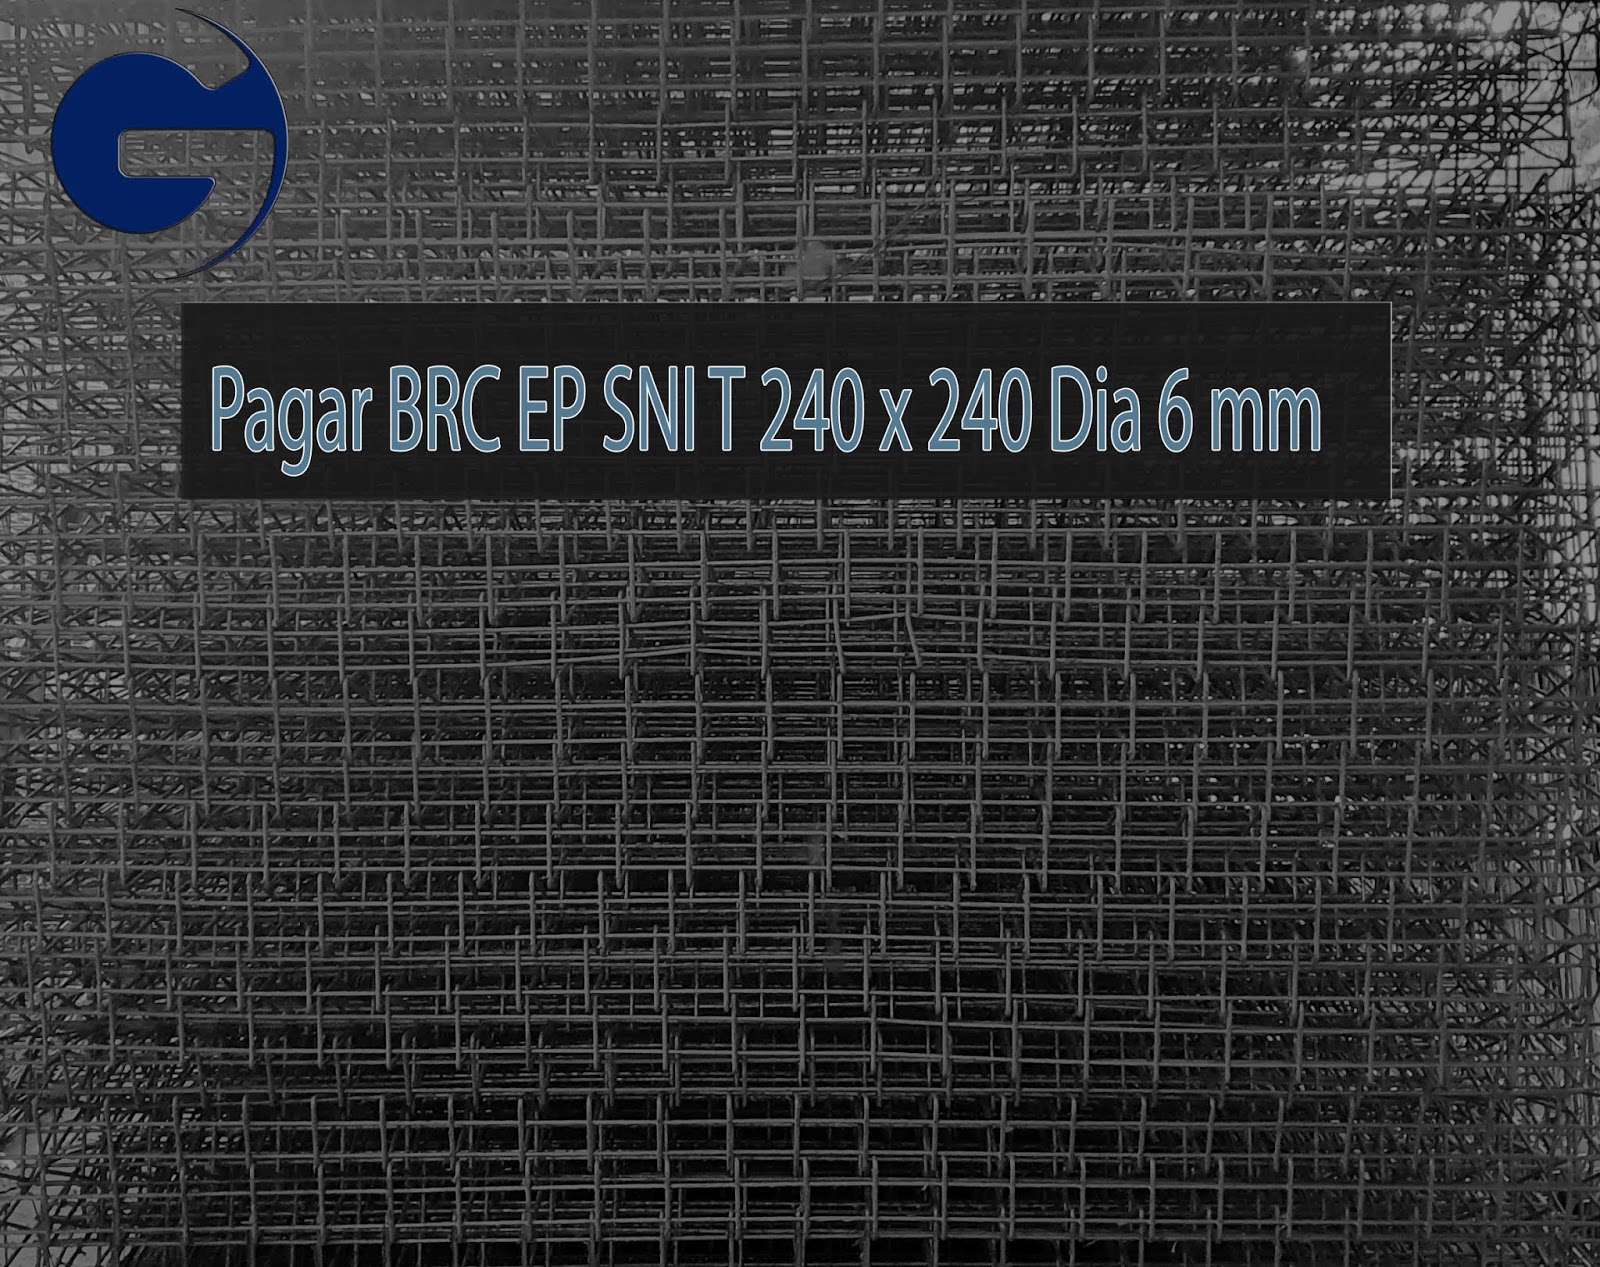 Jual Pagar BRC EP SNI T 240 x 240 Dia 6 mm